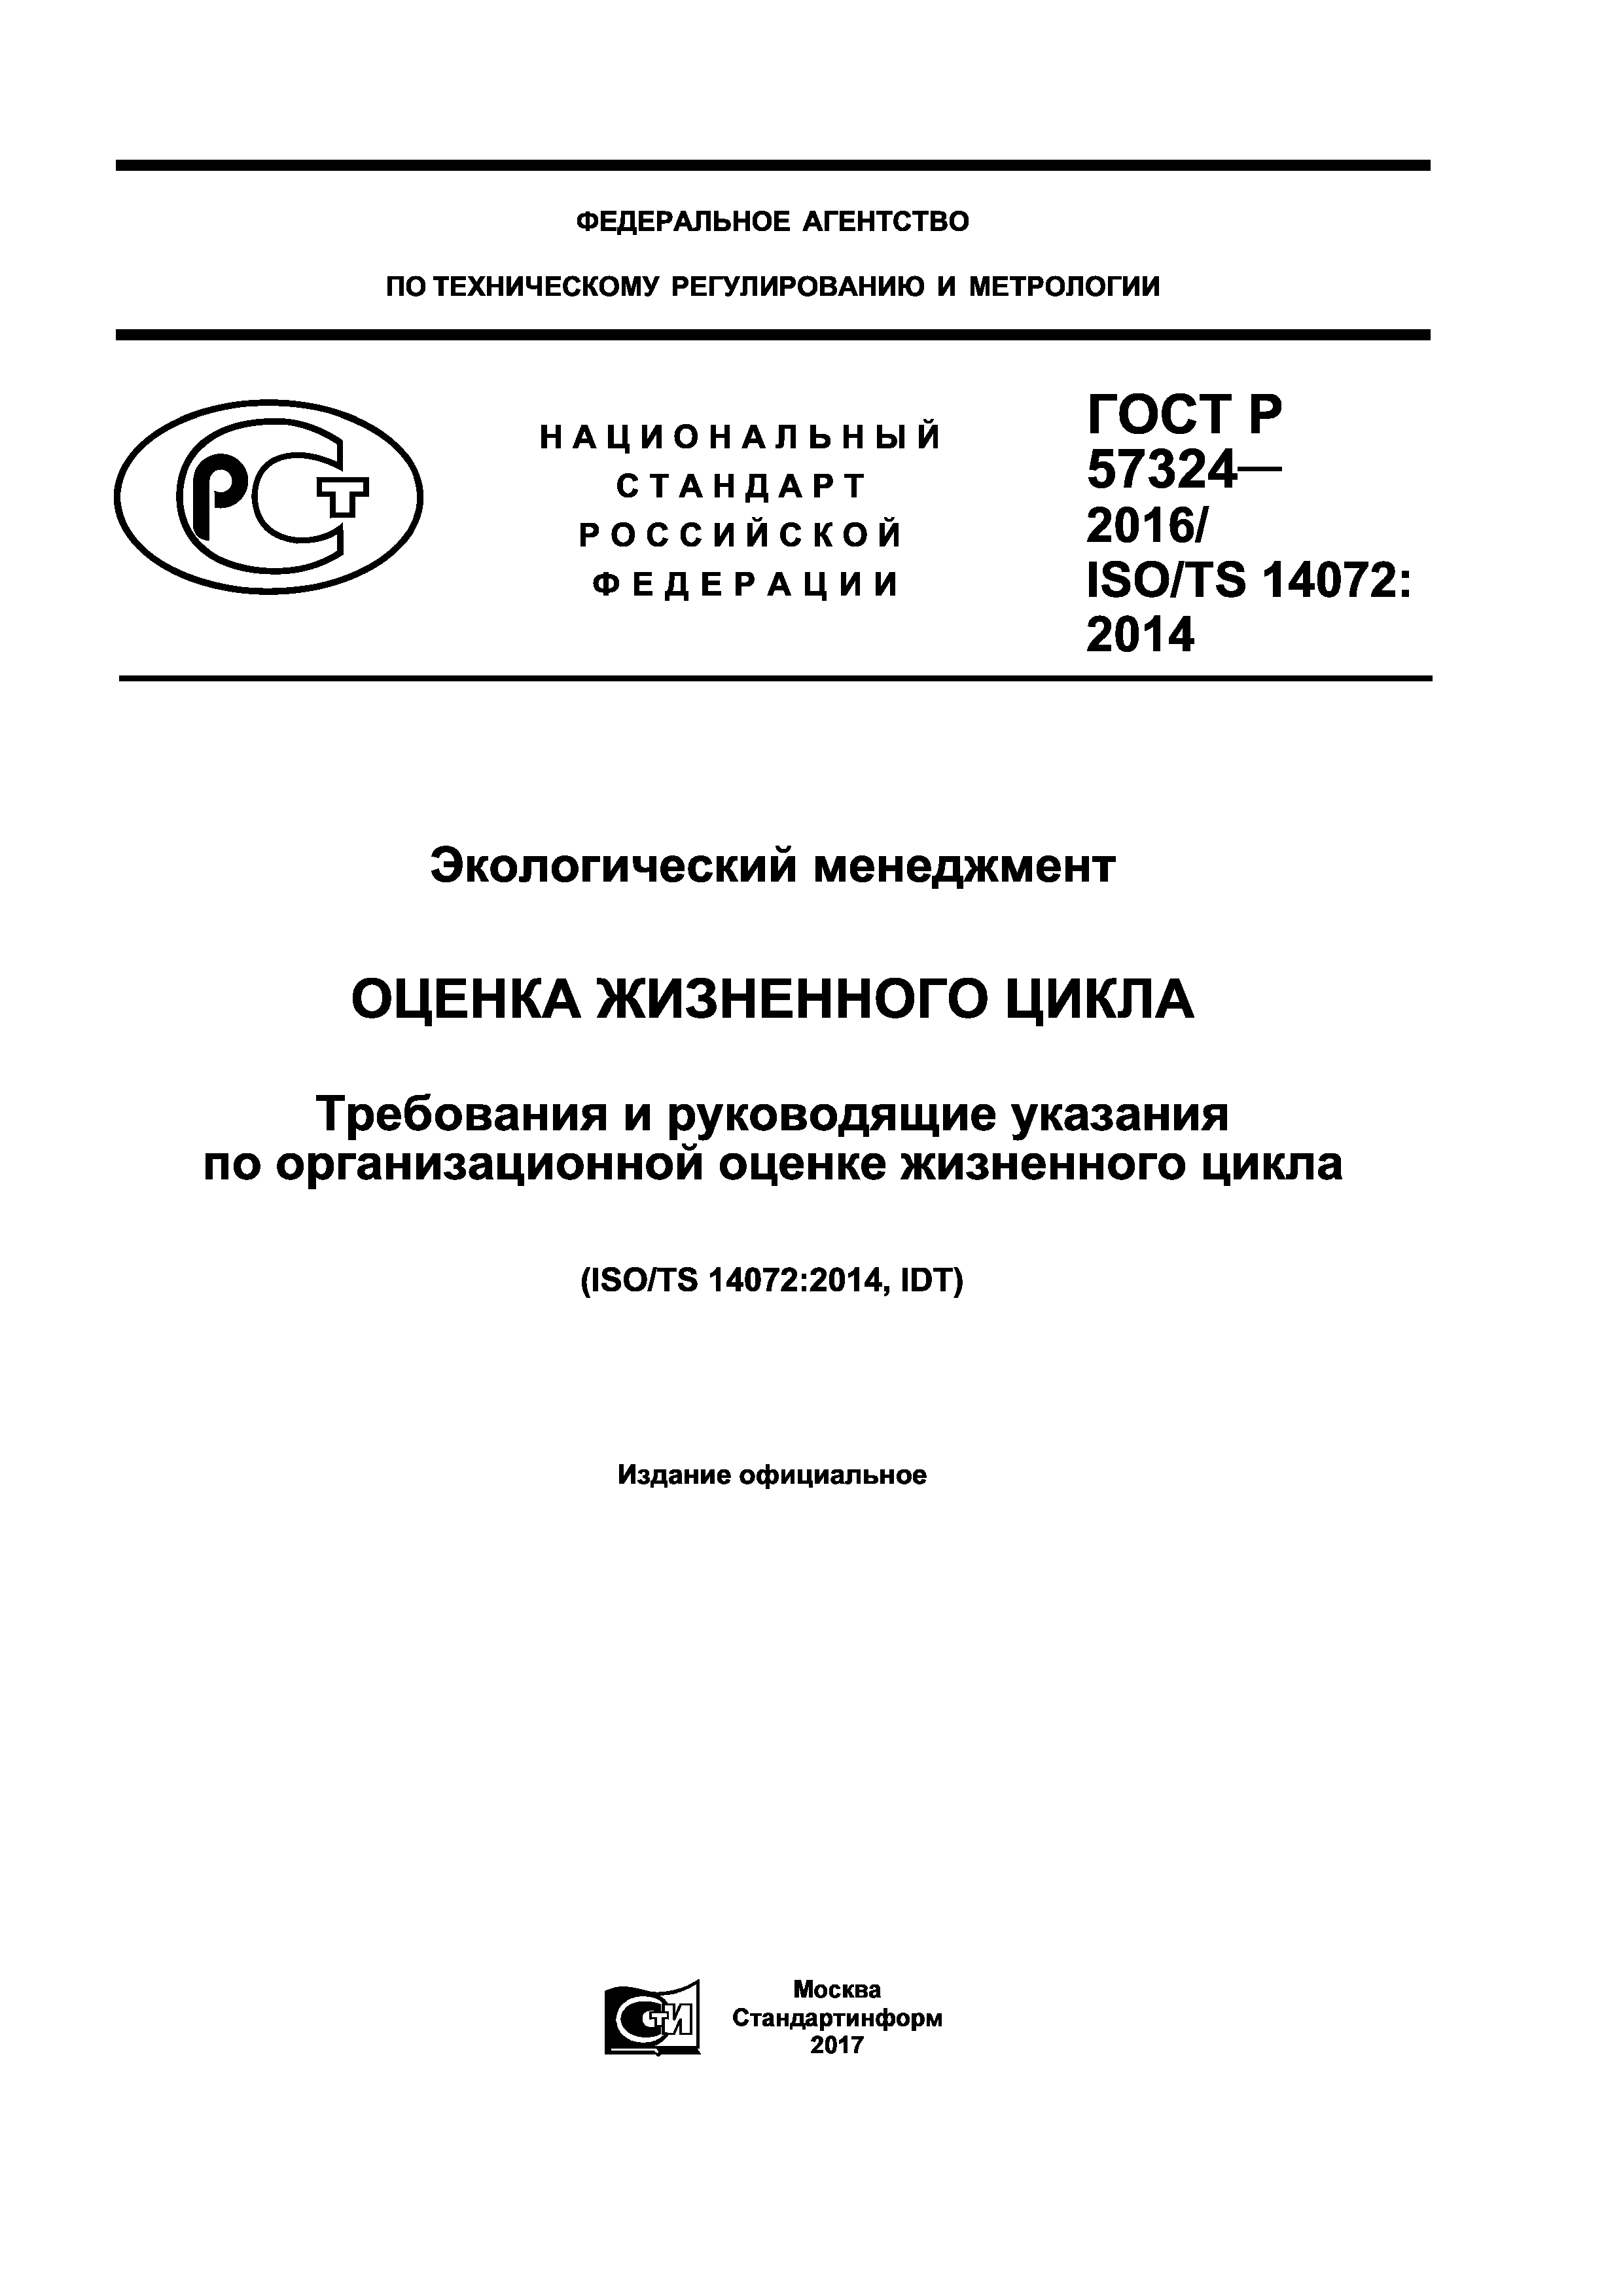 ГОСТ Р 57324-2016